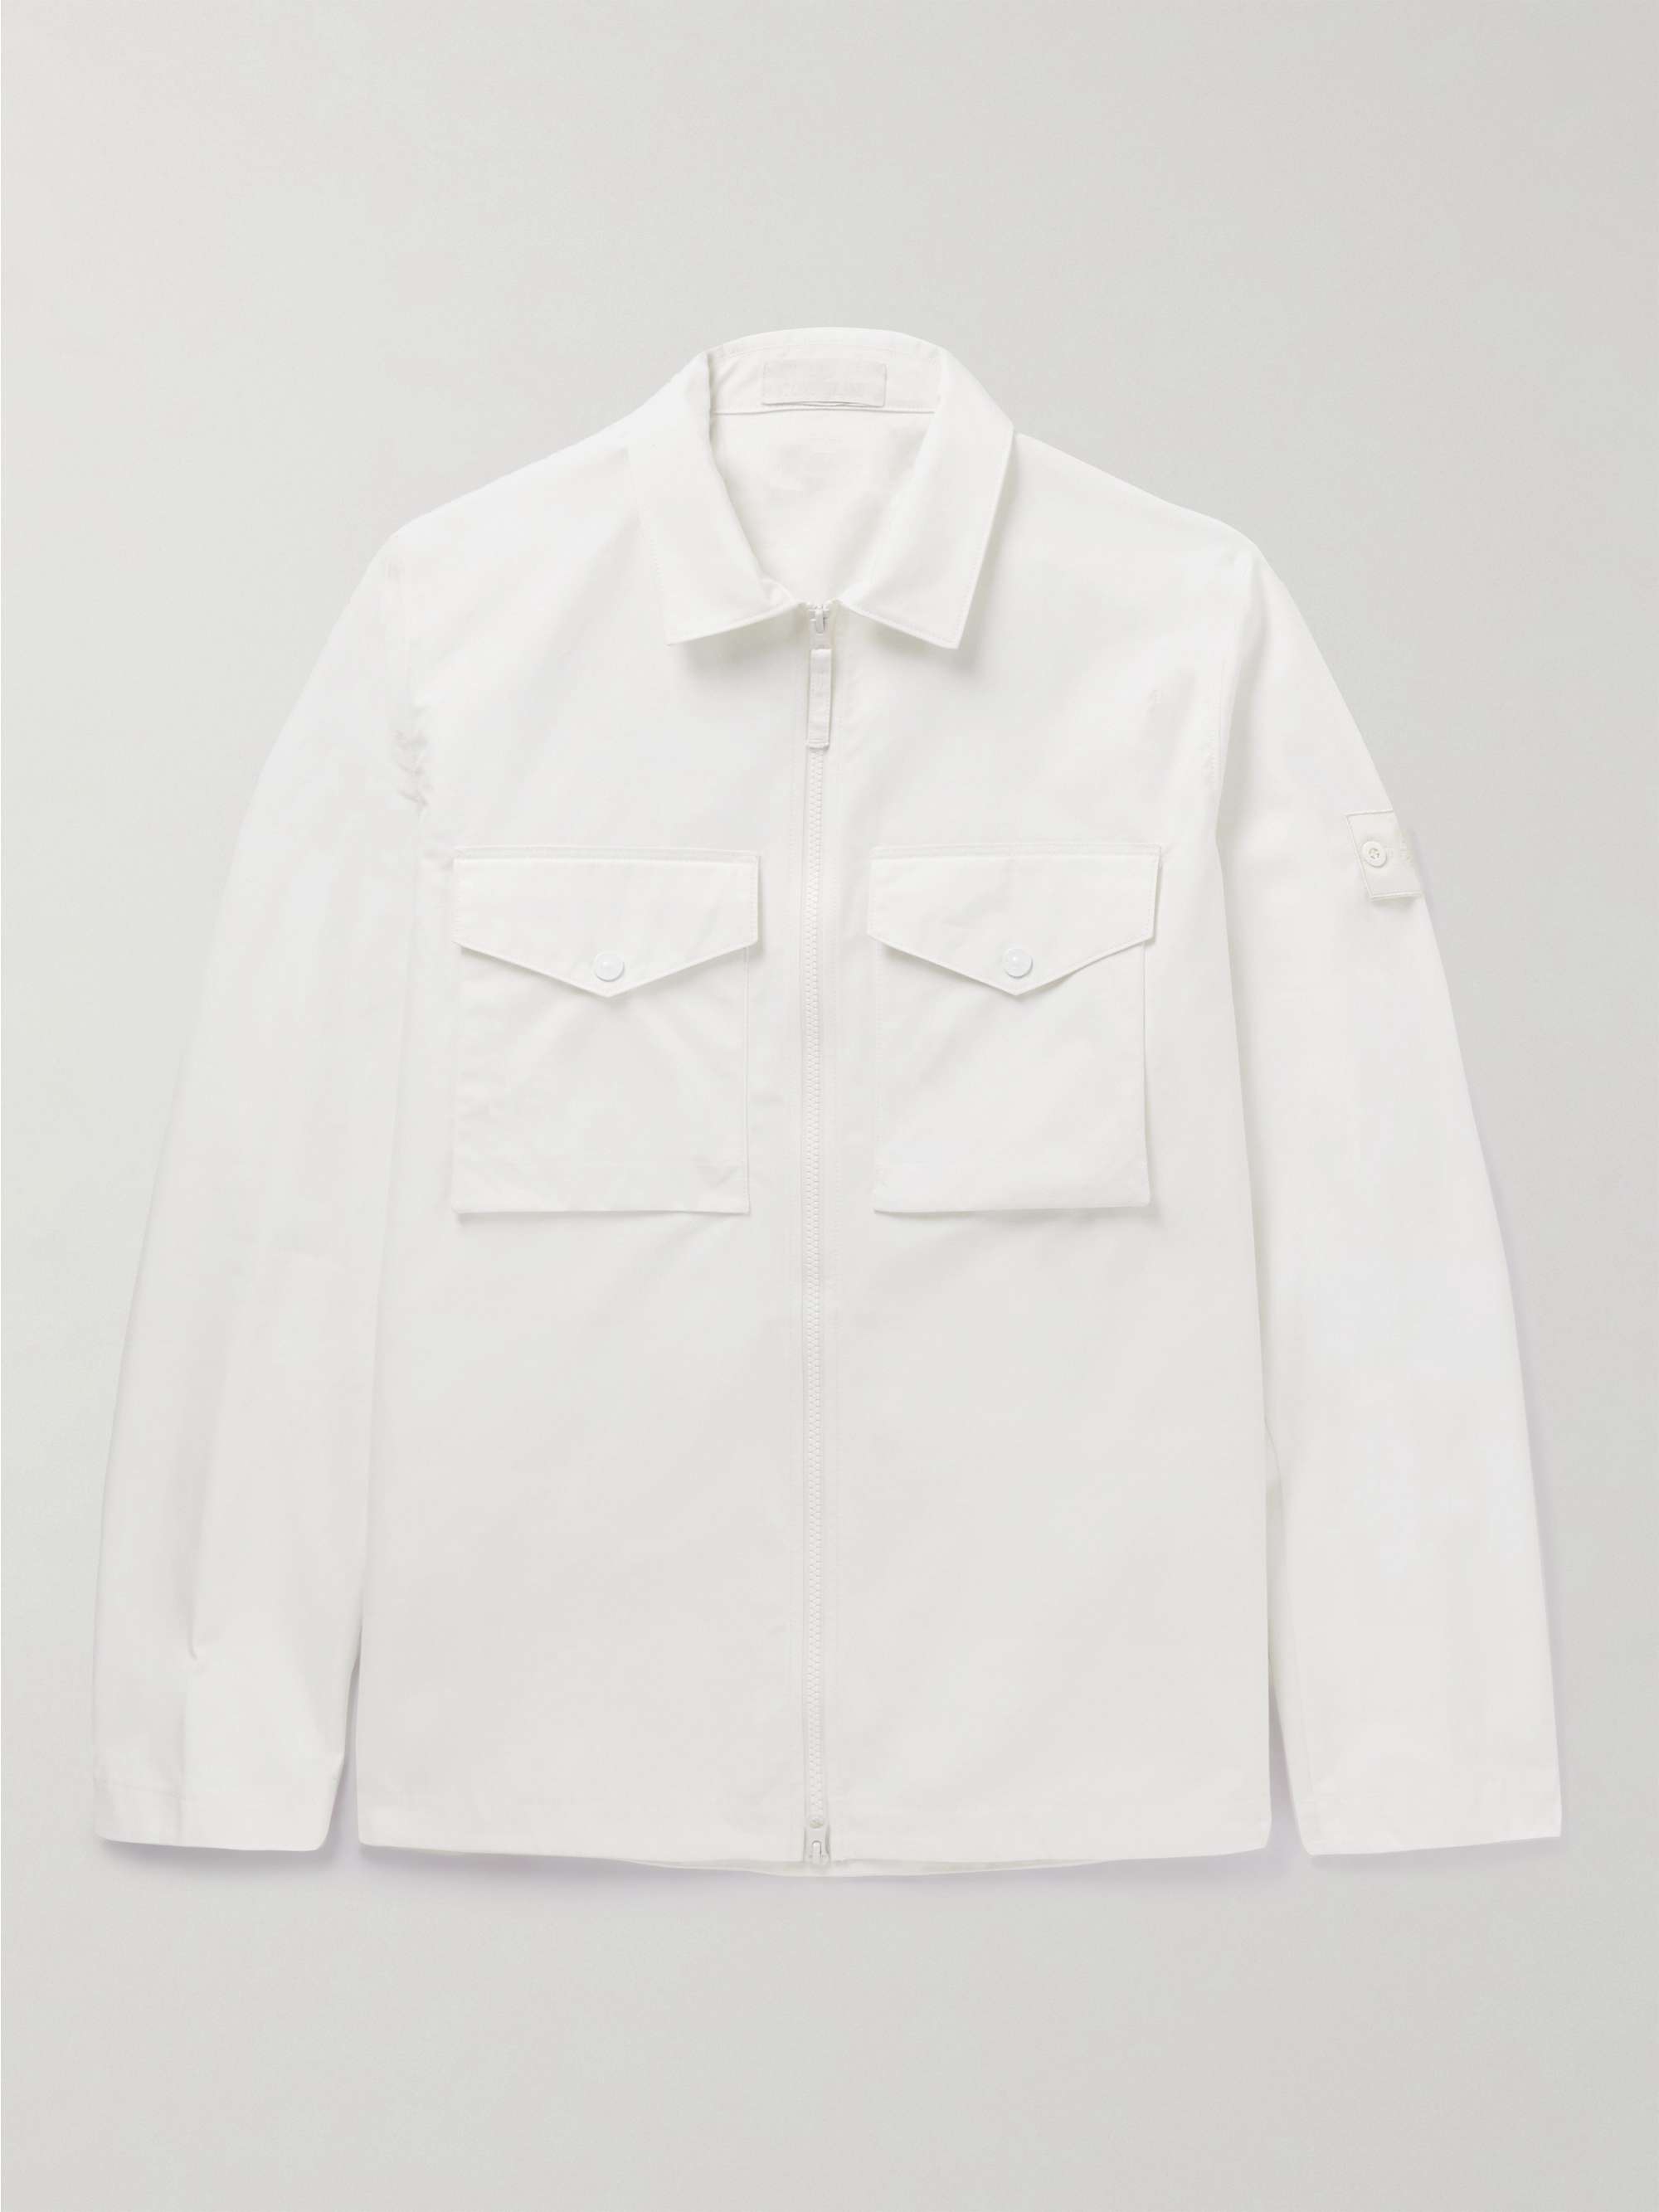 STONE ISLAND Ghost Cotton-Ventile® Overshirt